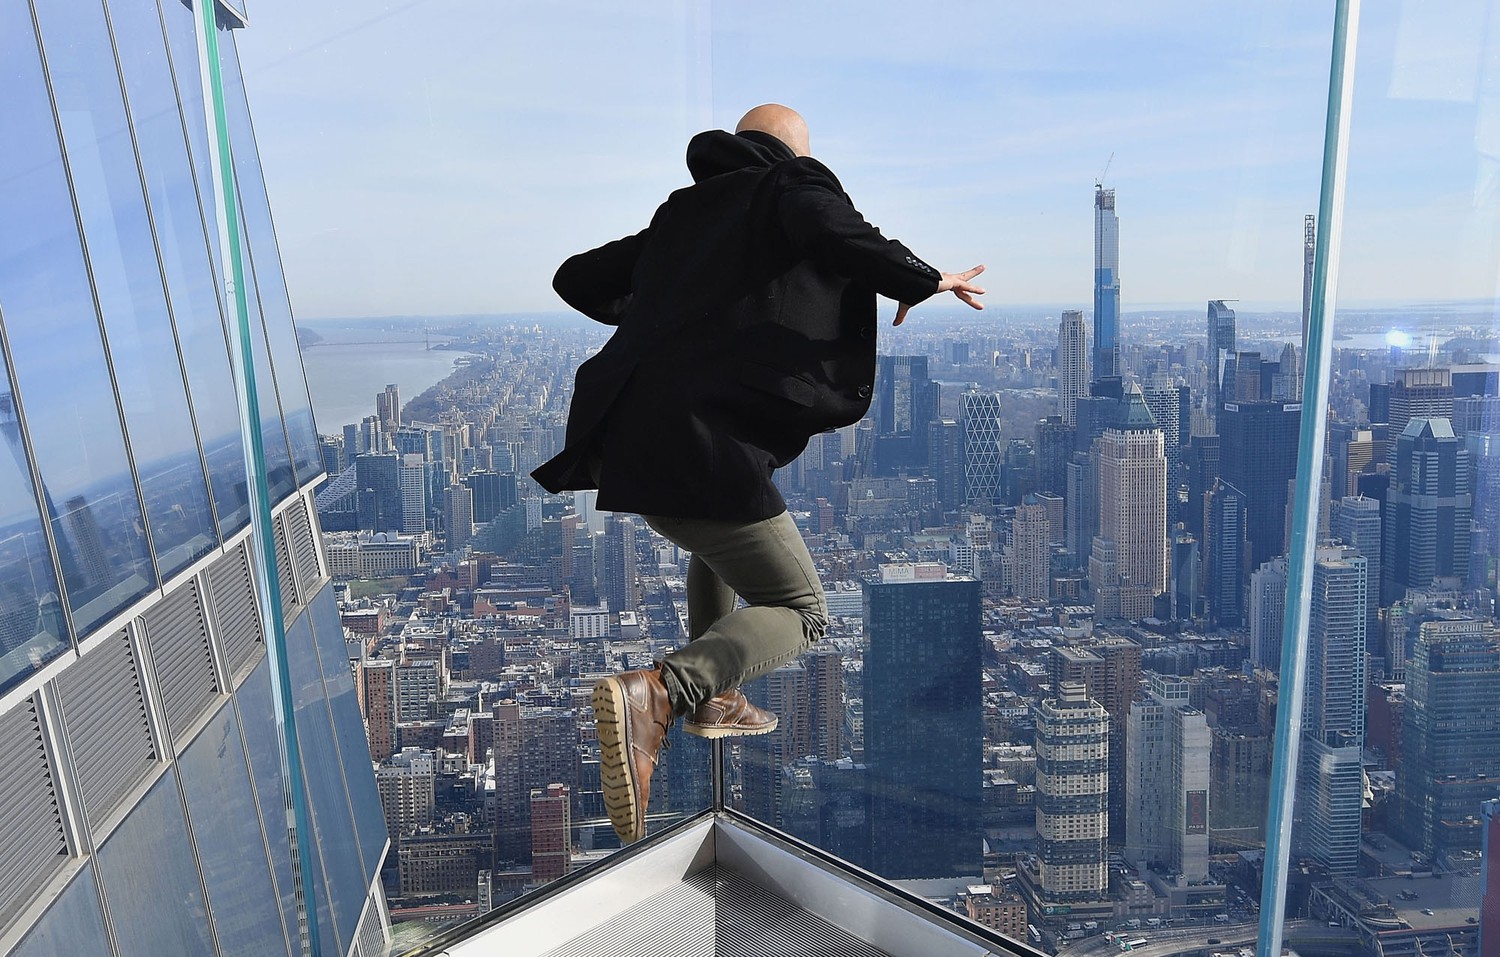 Нью-Йоркда Ғарбий яримшардаги энг баланд кузатув майдончасида сакраётган эркак. Hudson Yards Tower’нинг 100-қаватидаги The Edge кузатув майдончаси 335 метр баландликда жойлашган.